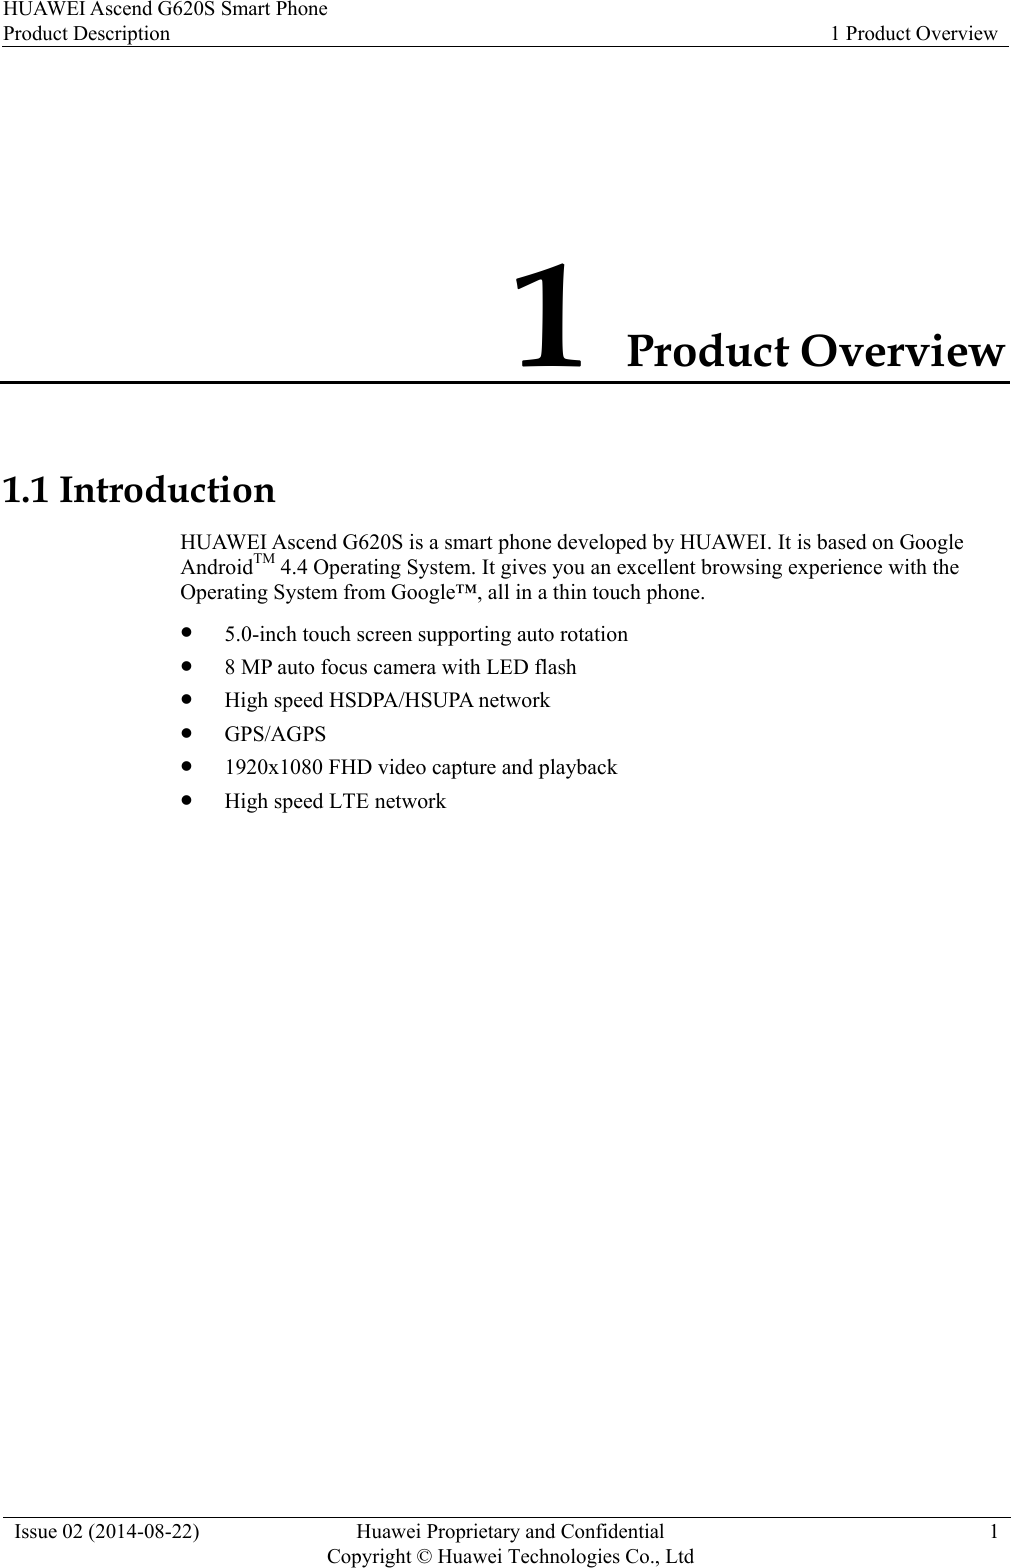 Huawei Ascend G6s Mobile Phone Product Description V100r001 02 En Normal L03 Descripcion Del Producto Ingles